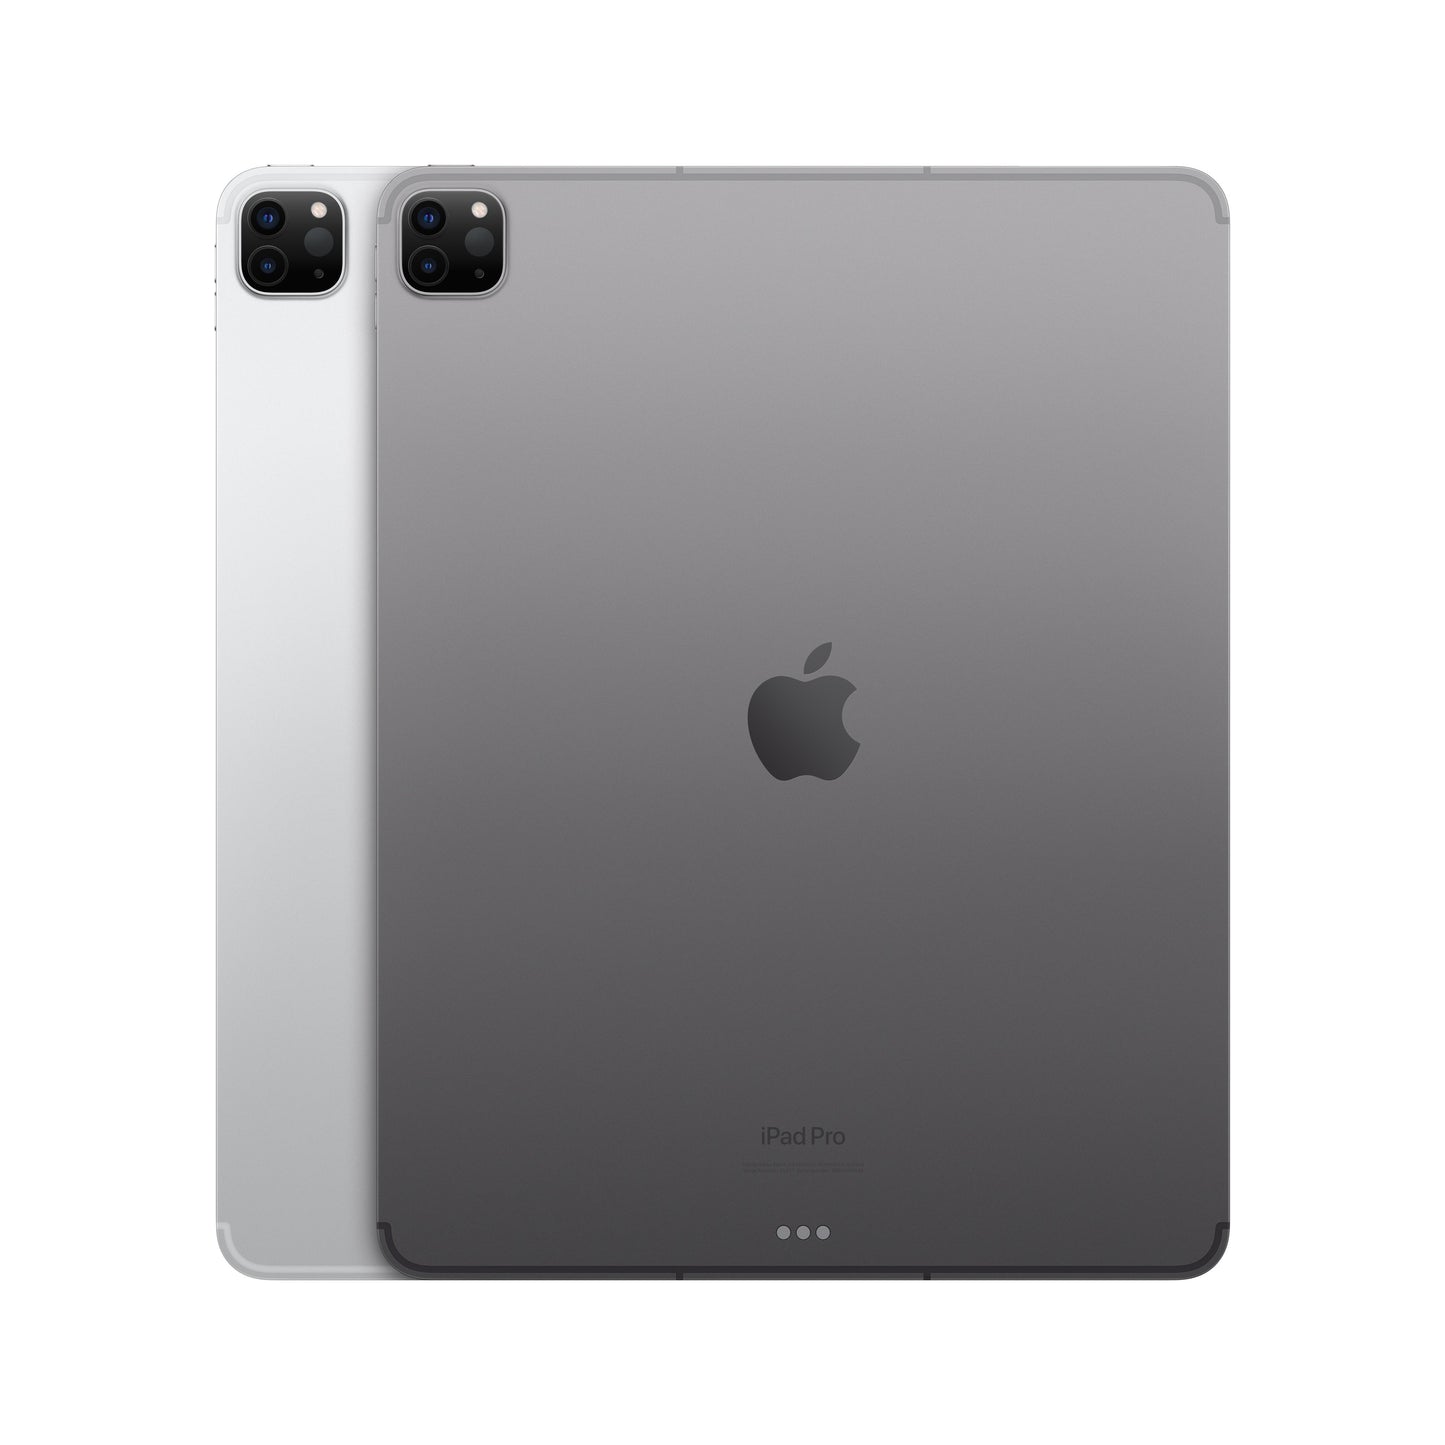 2022 iPad Pro مقاس 12.9 إنش Wi-Fi 128GB + شريحة  - فضي (الجيل السادس)